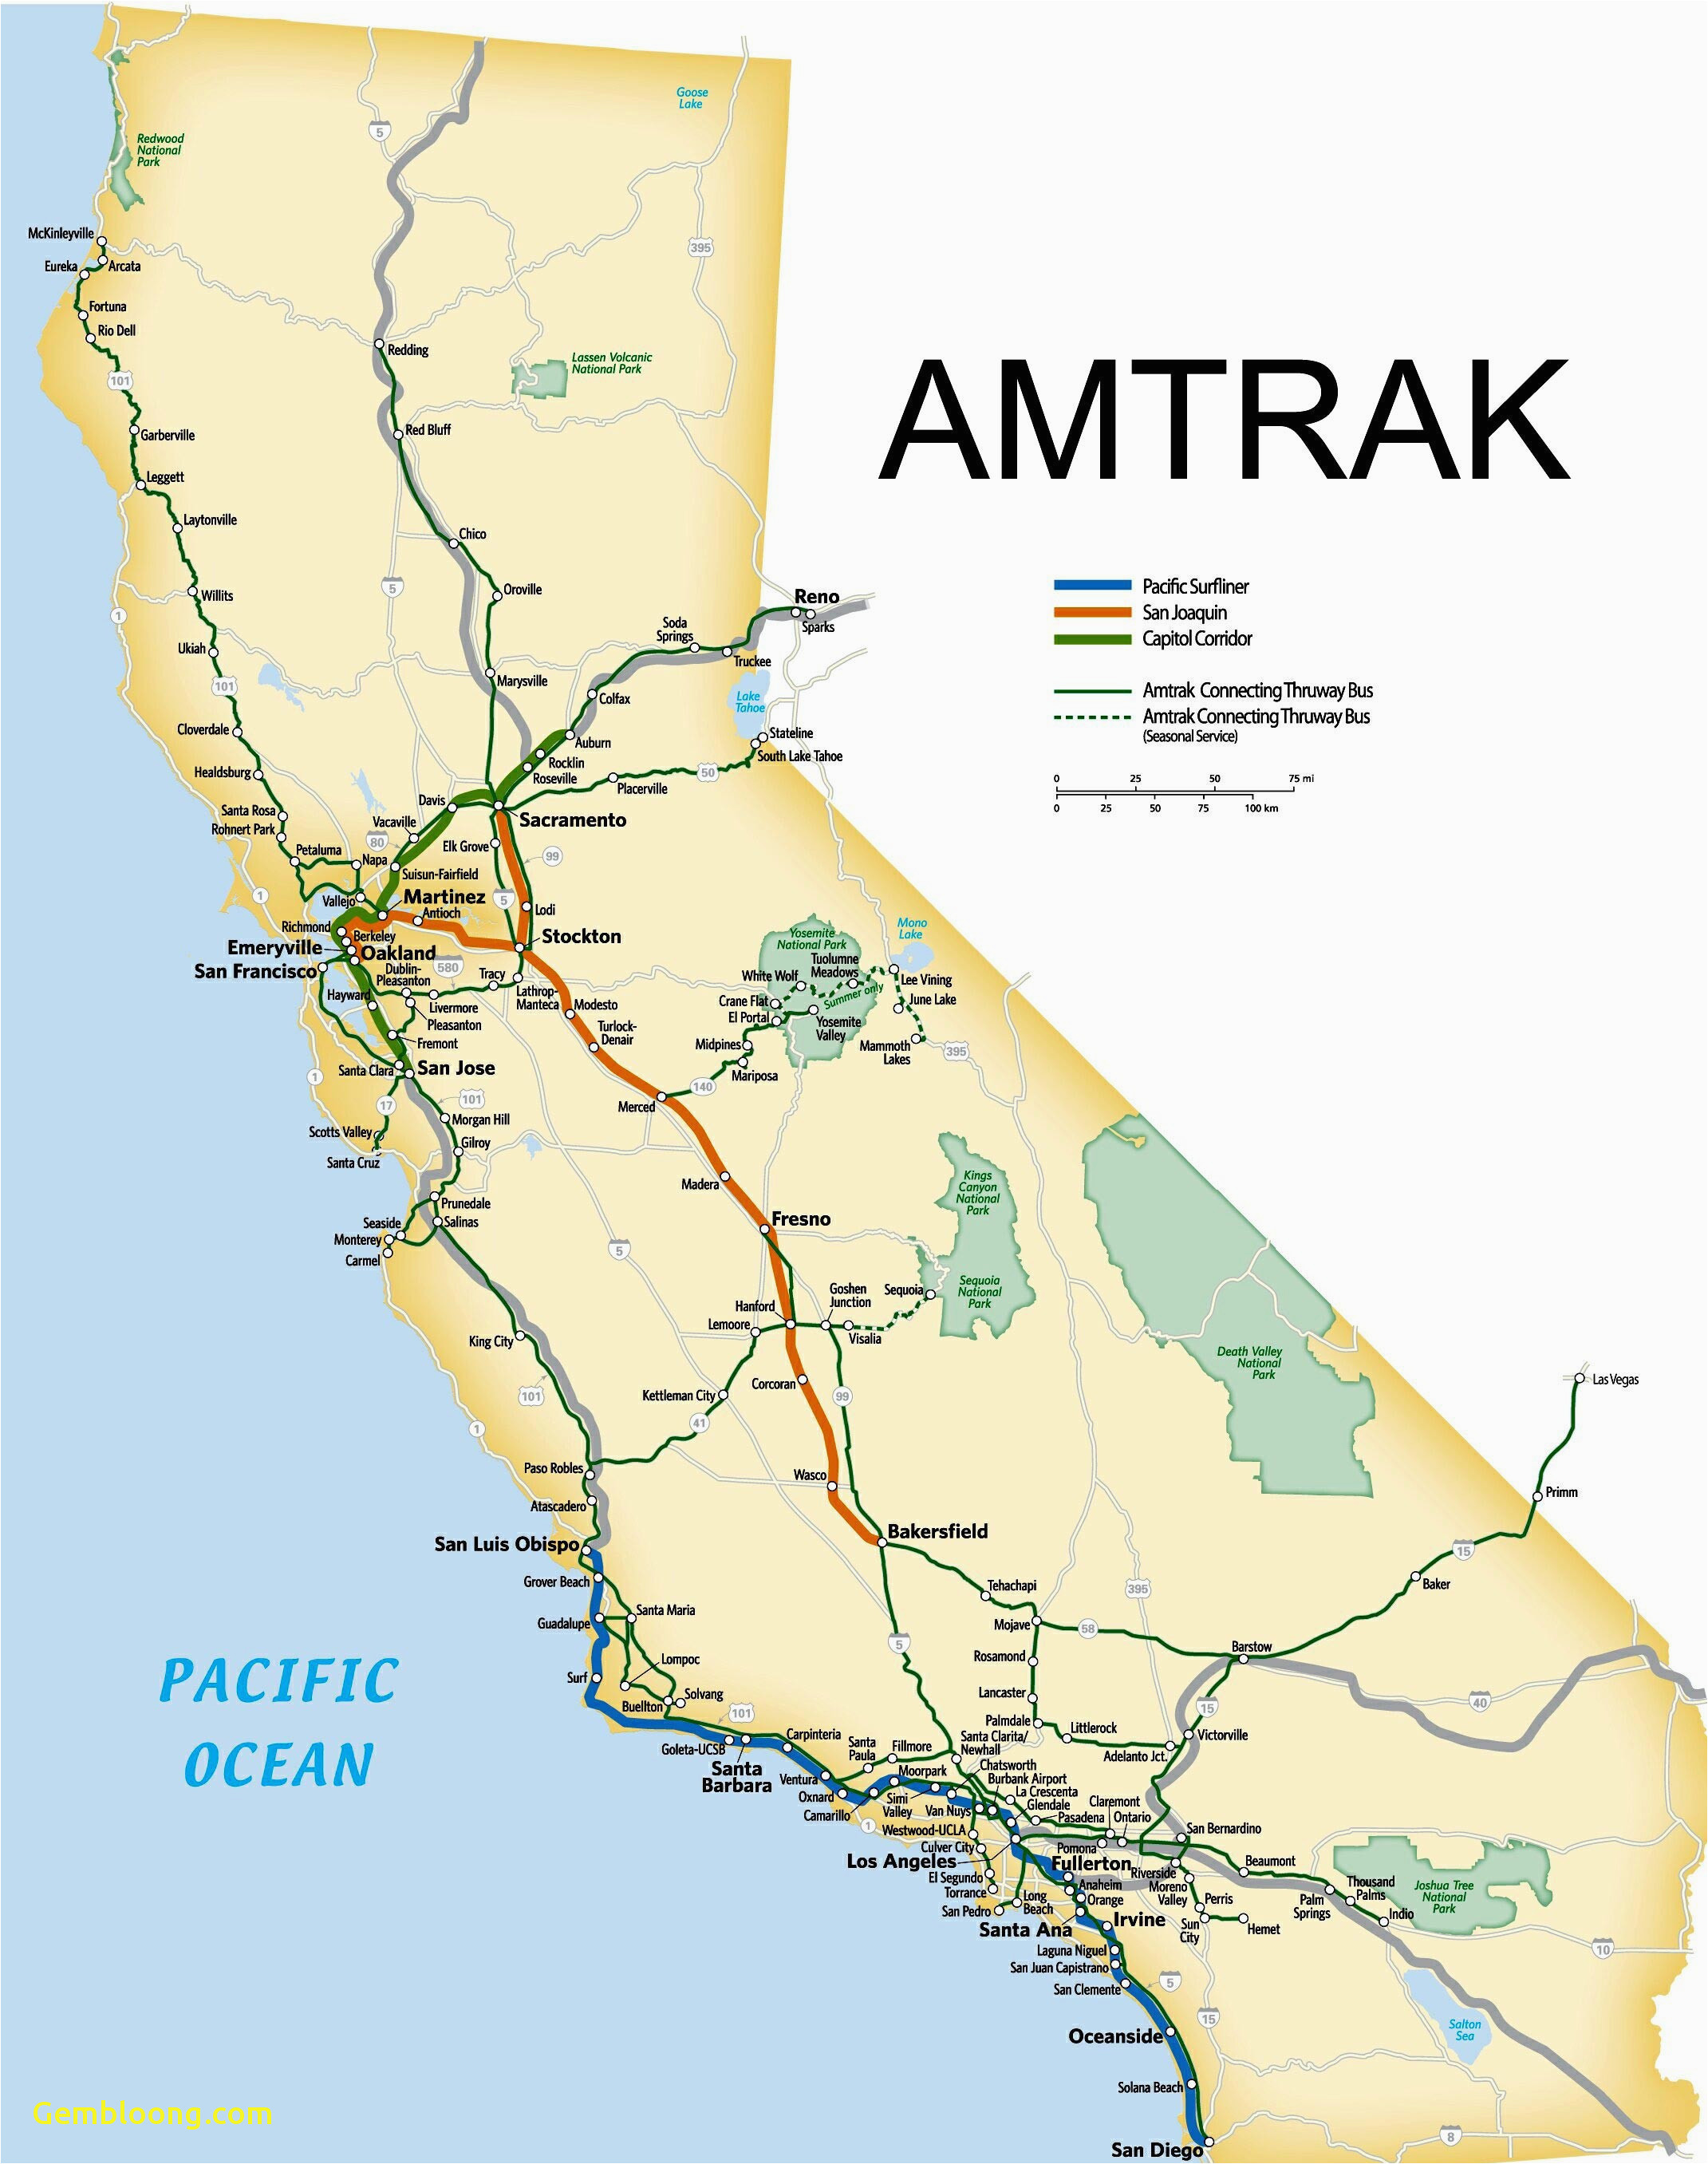 California Amtrak Stations Map California Amtrak Route Map Www Bilderbeste Com Of California Amtrak Stations Map 1 